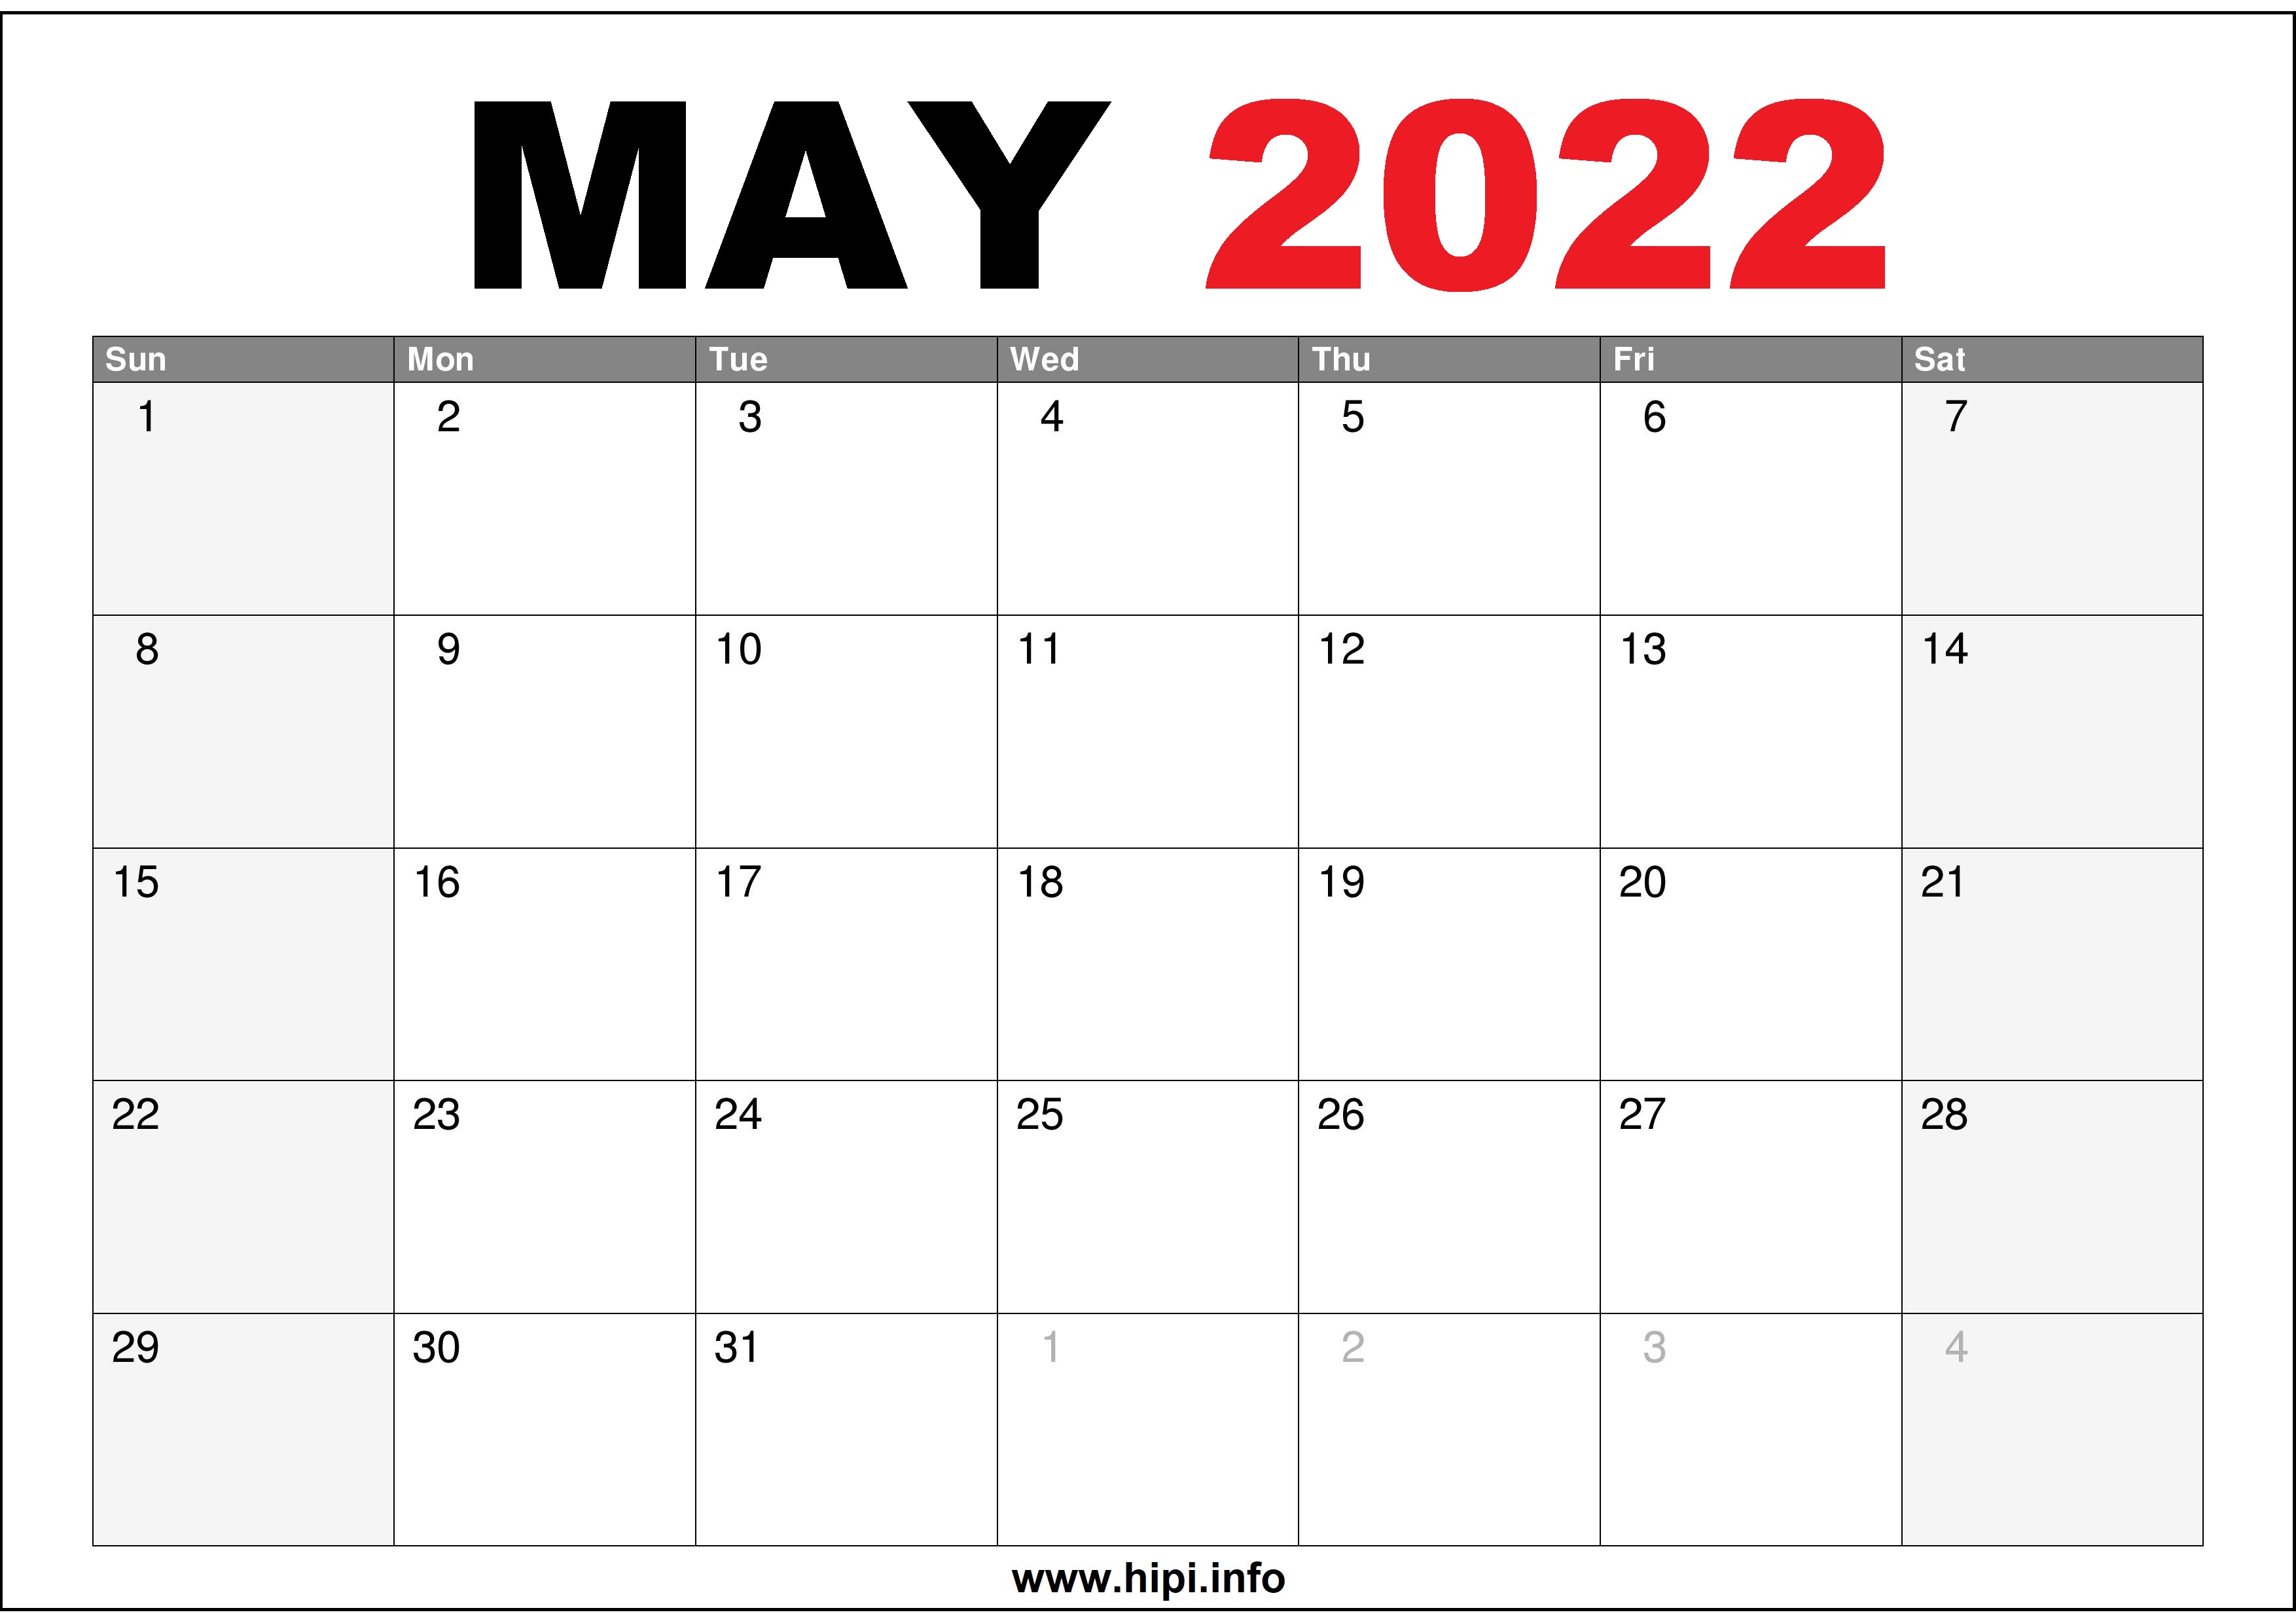 May Calendar 2022 Printable May 2022 Calendar Printable Us - Hipi.info | Calendars Printable Free